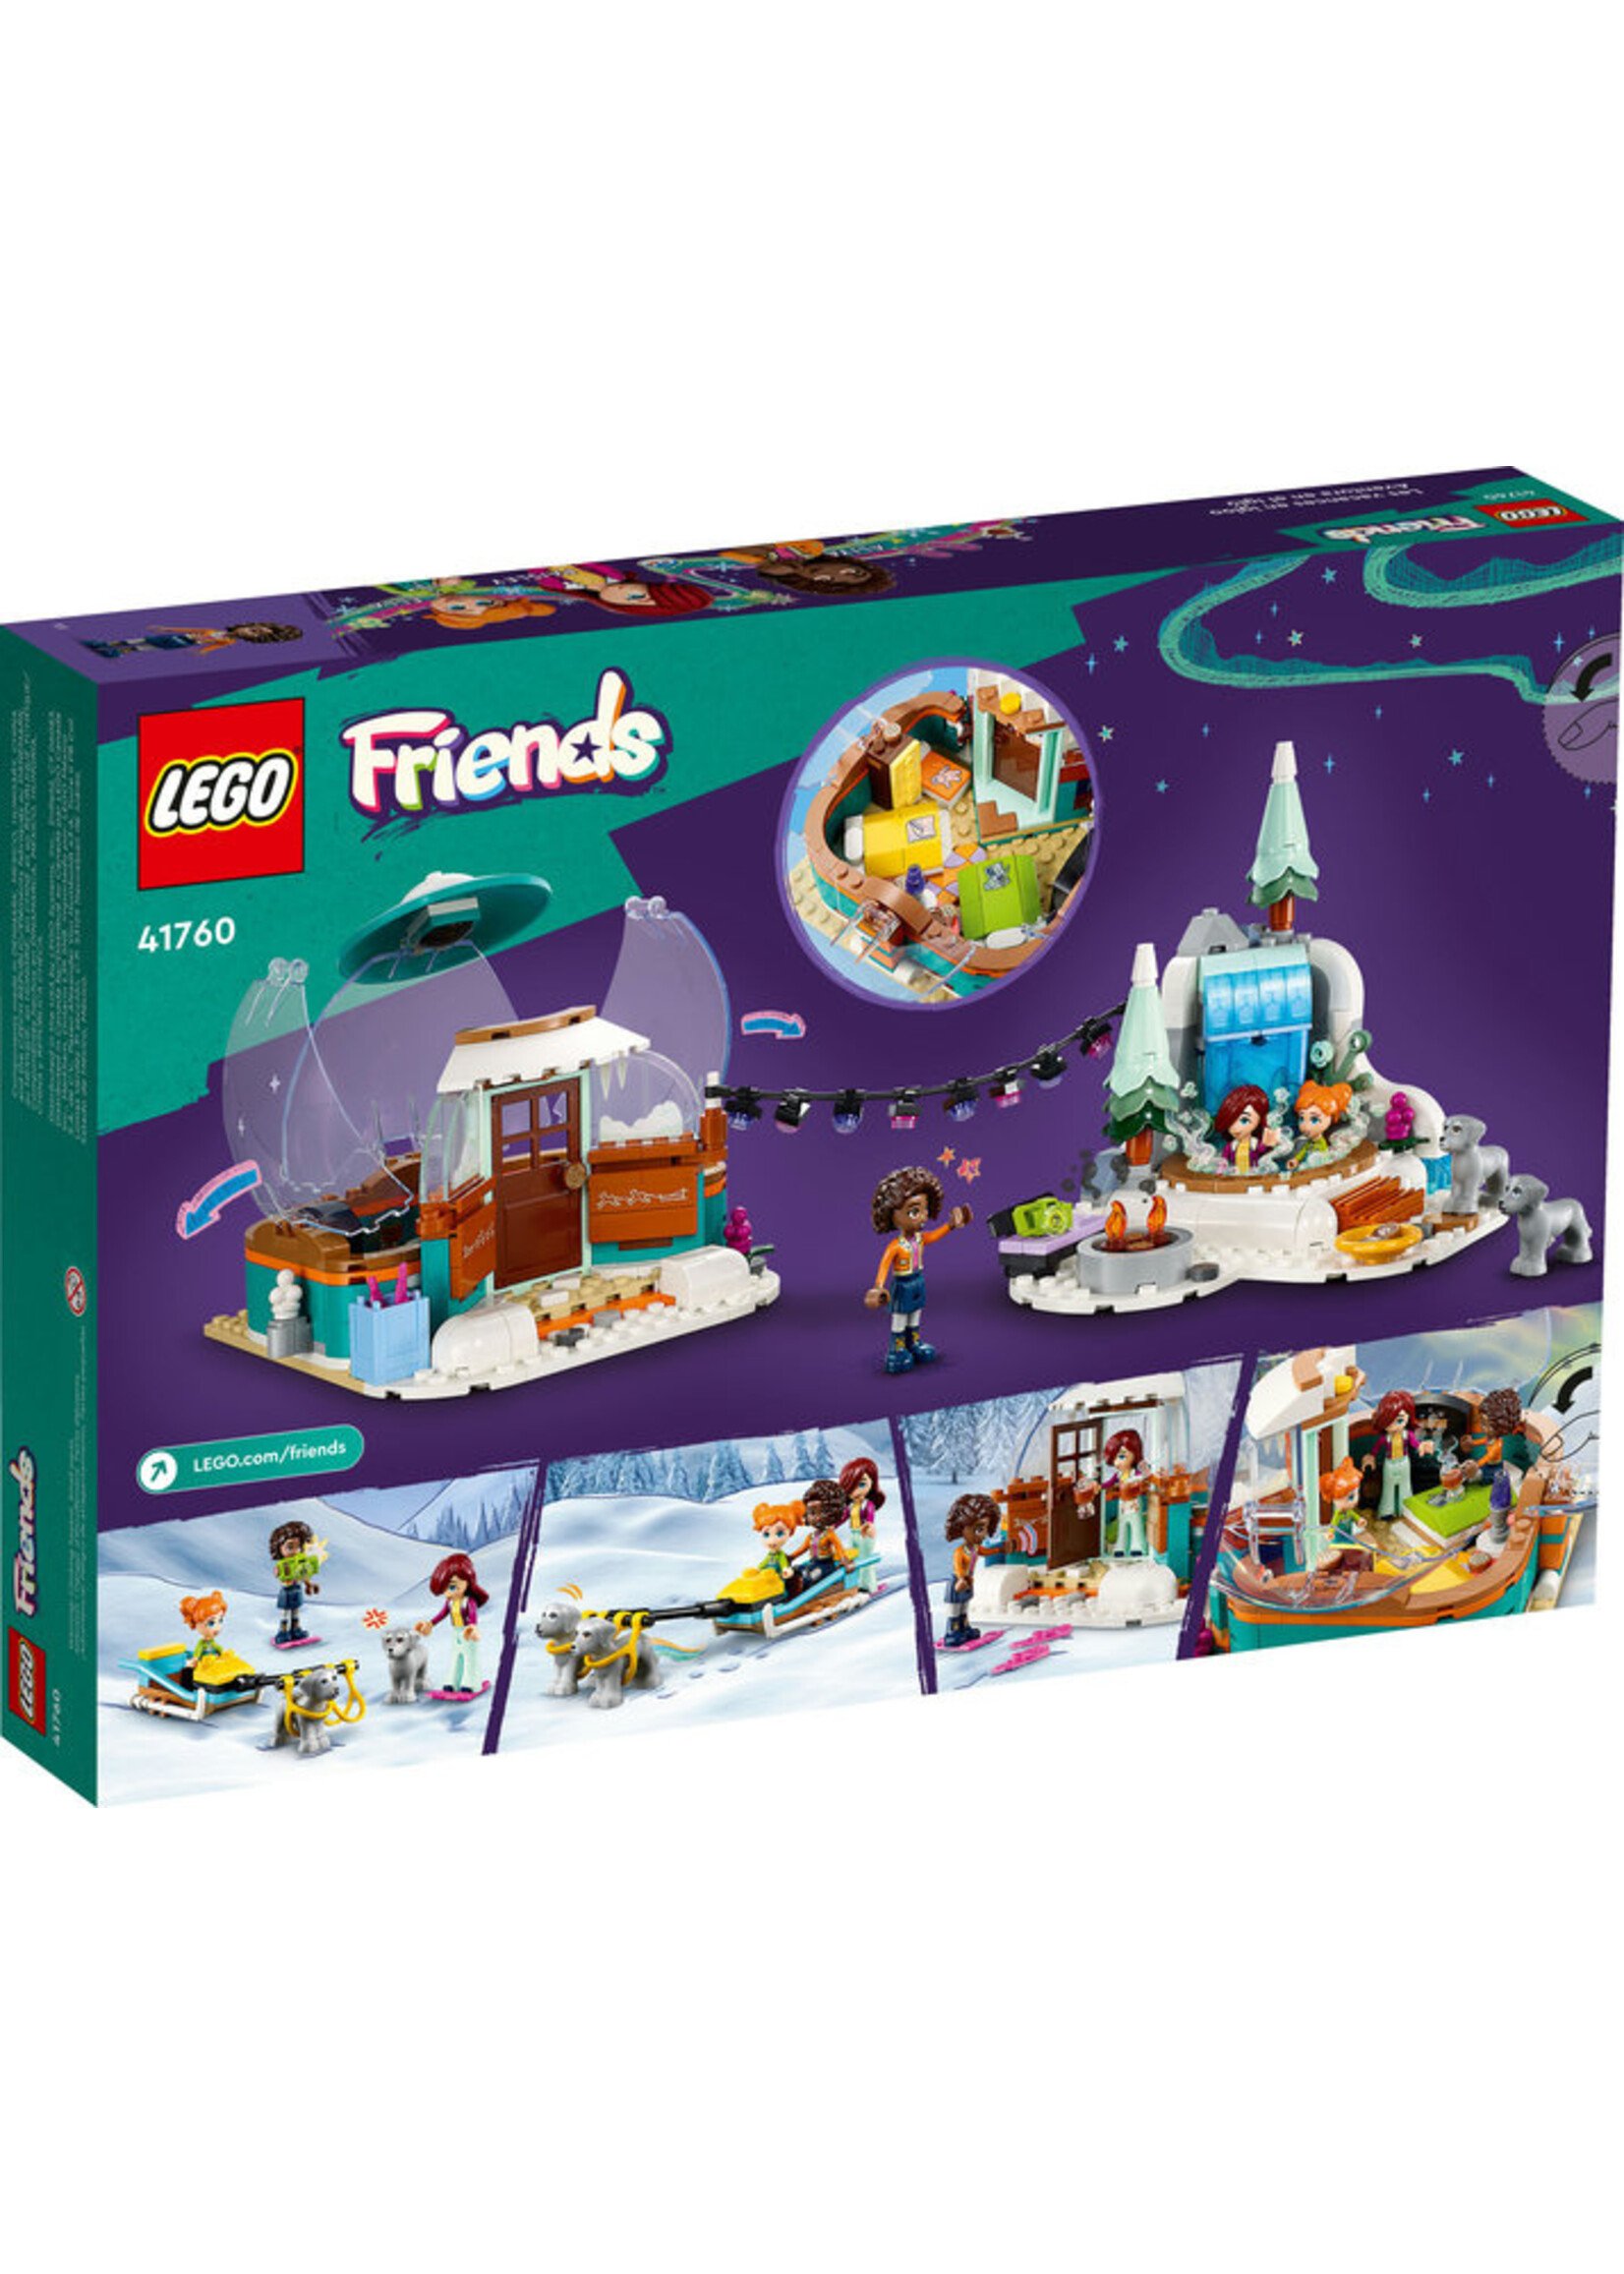 LEGO 41760 - Igloo Holiday Adventure